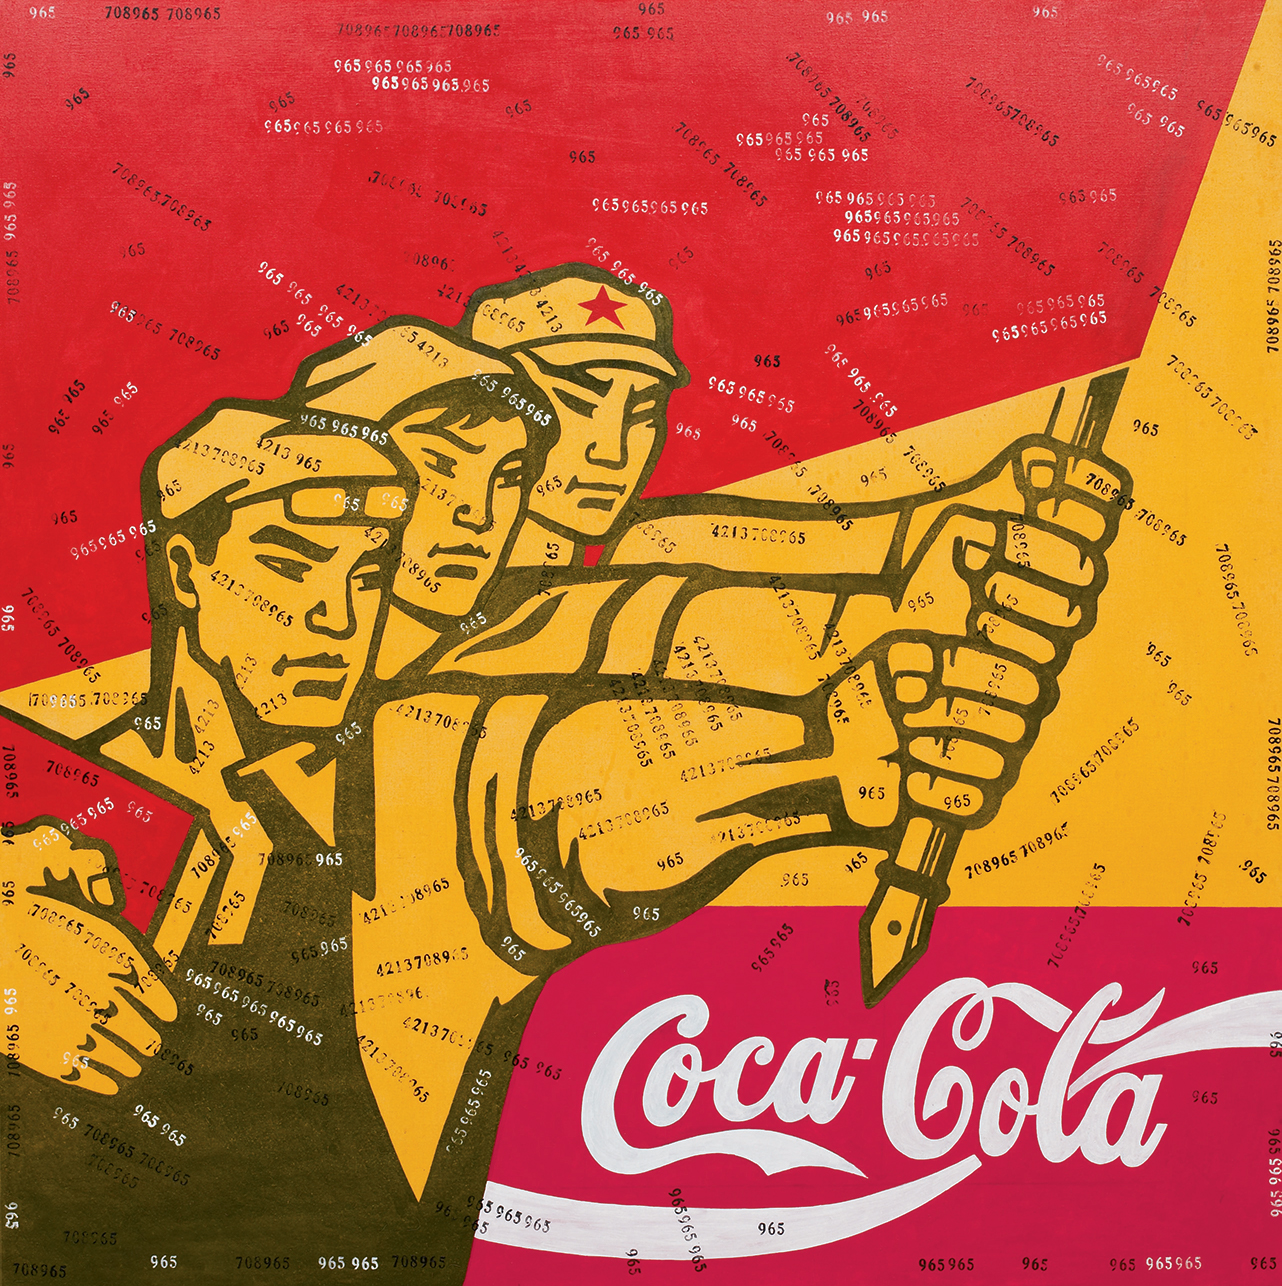 Artwork: Wang Guangyi, Great Criticism: Coca-Cola.